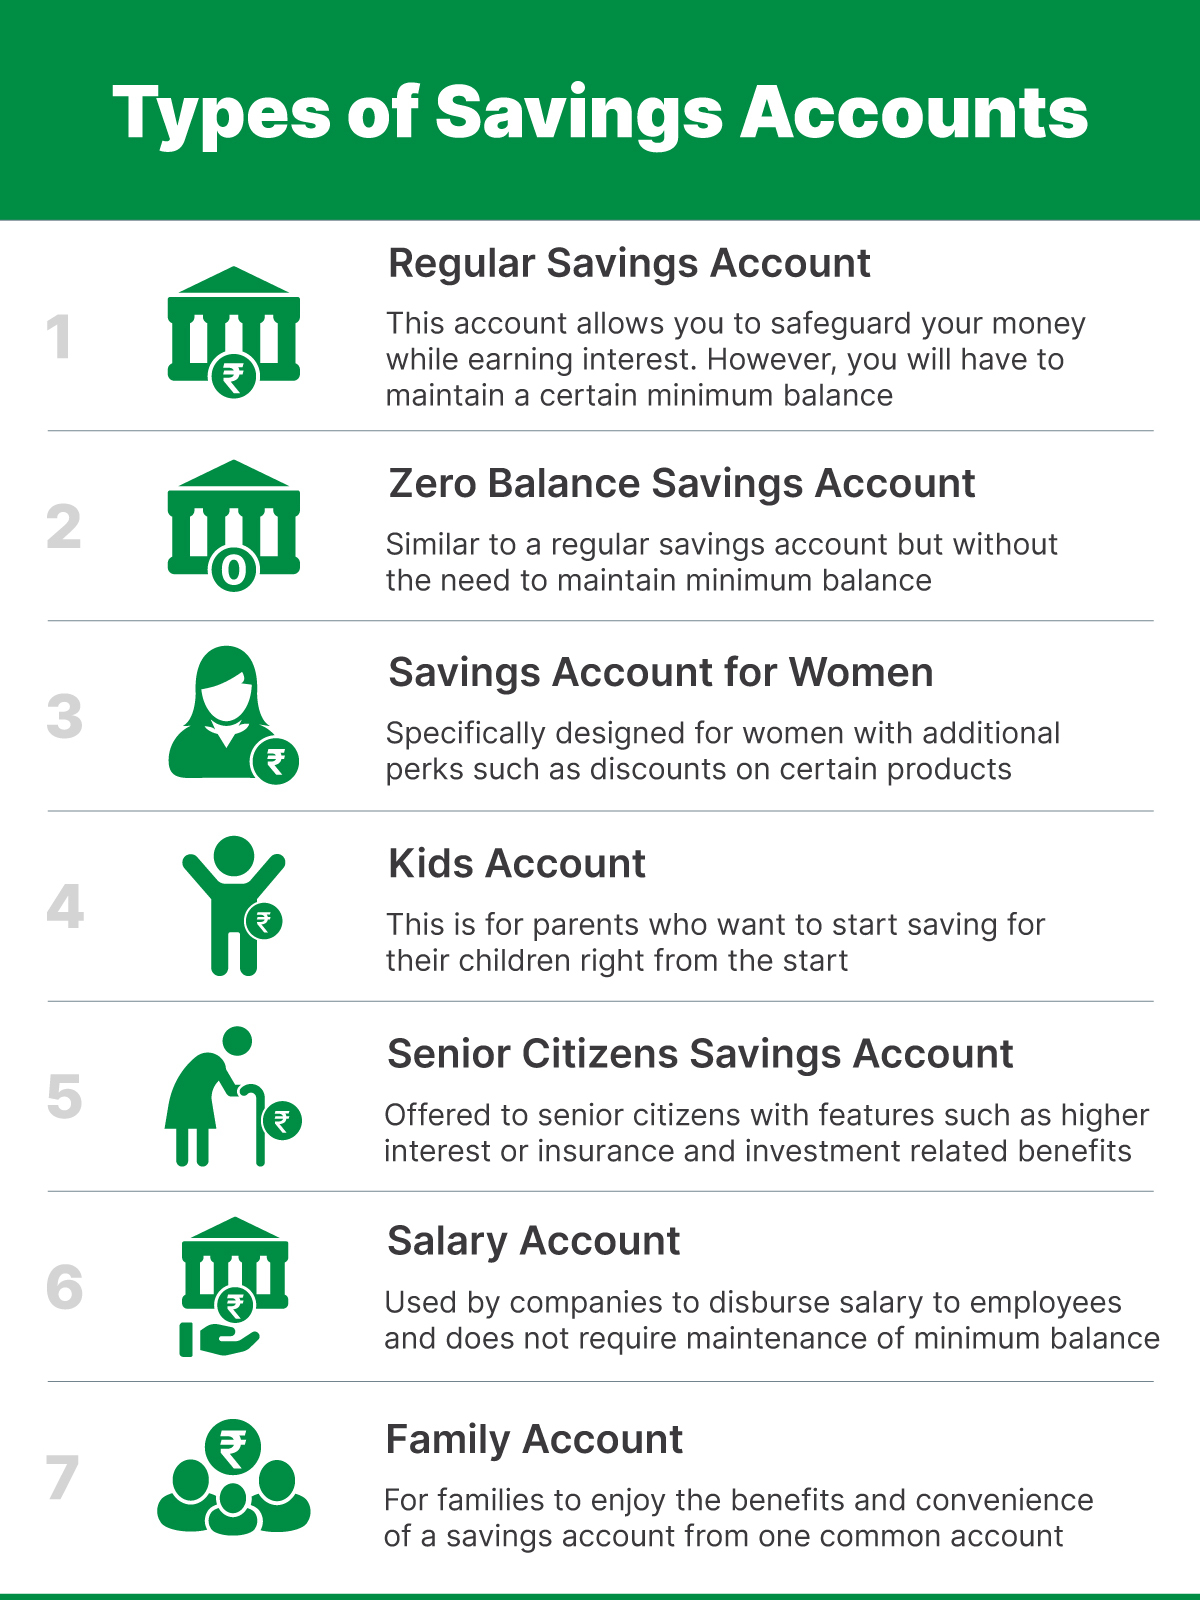 7 Types of Savings Accounts